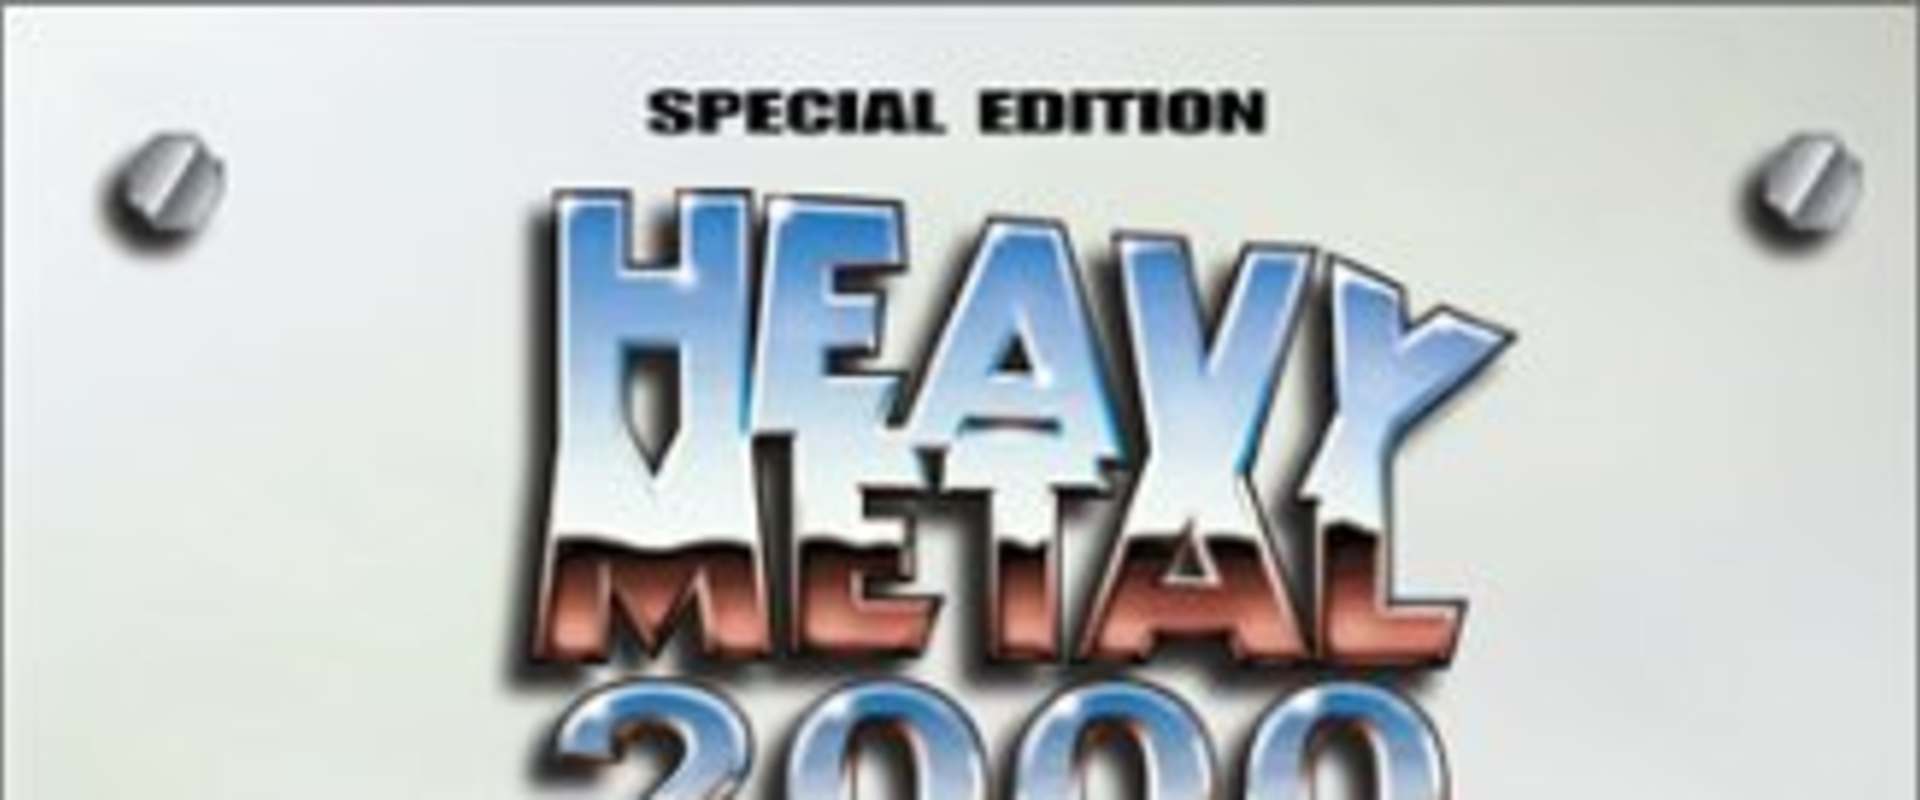 Heavy Metal 2000 background 1